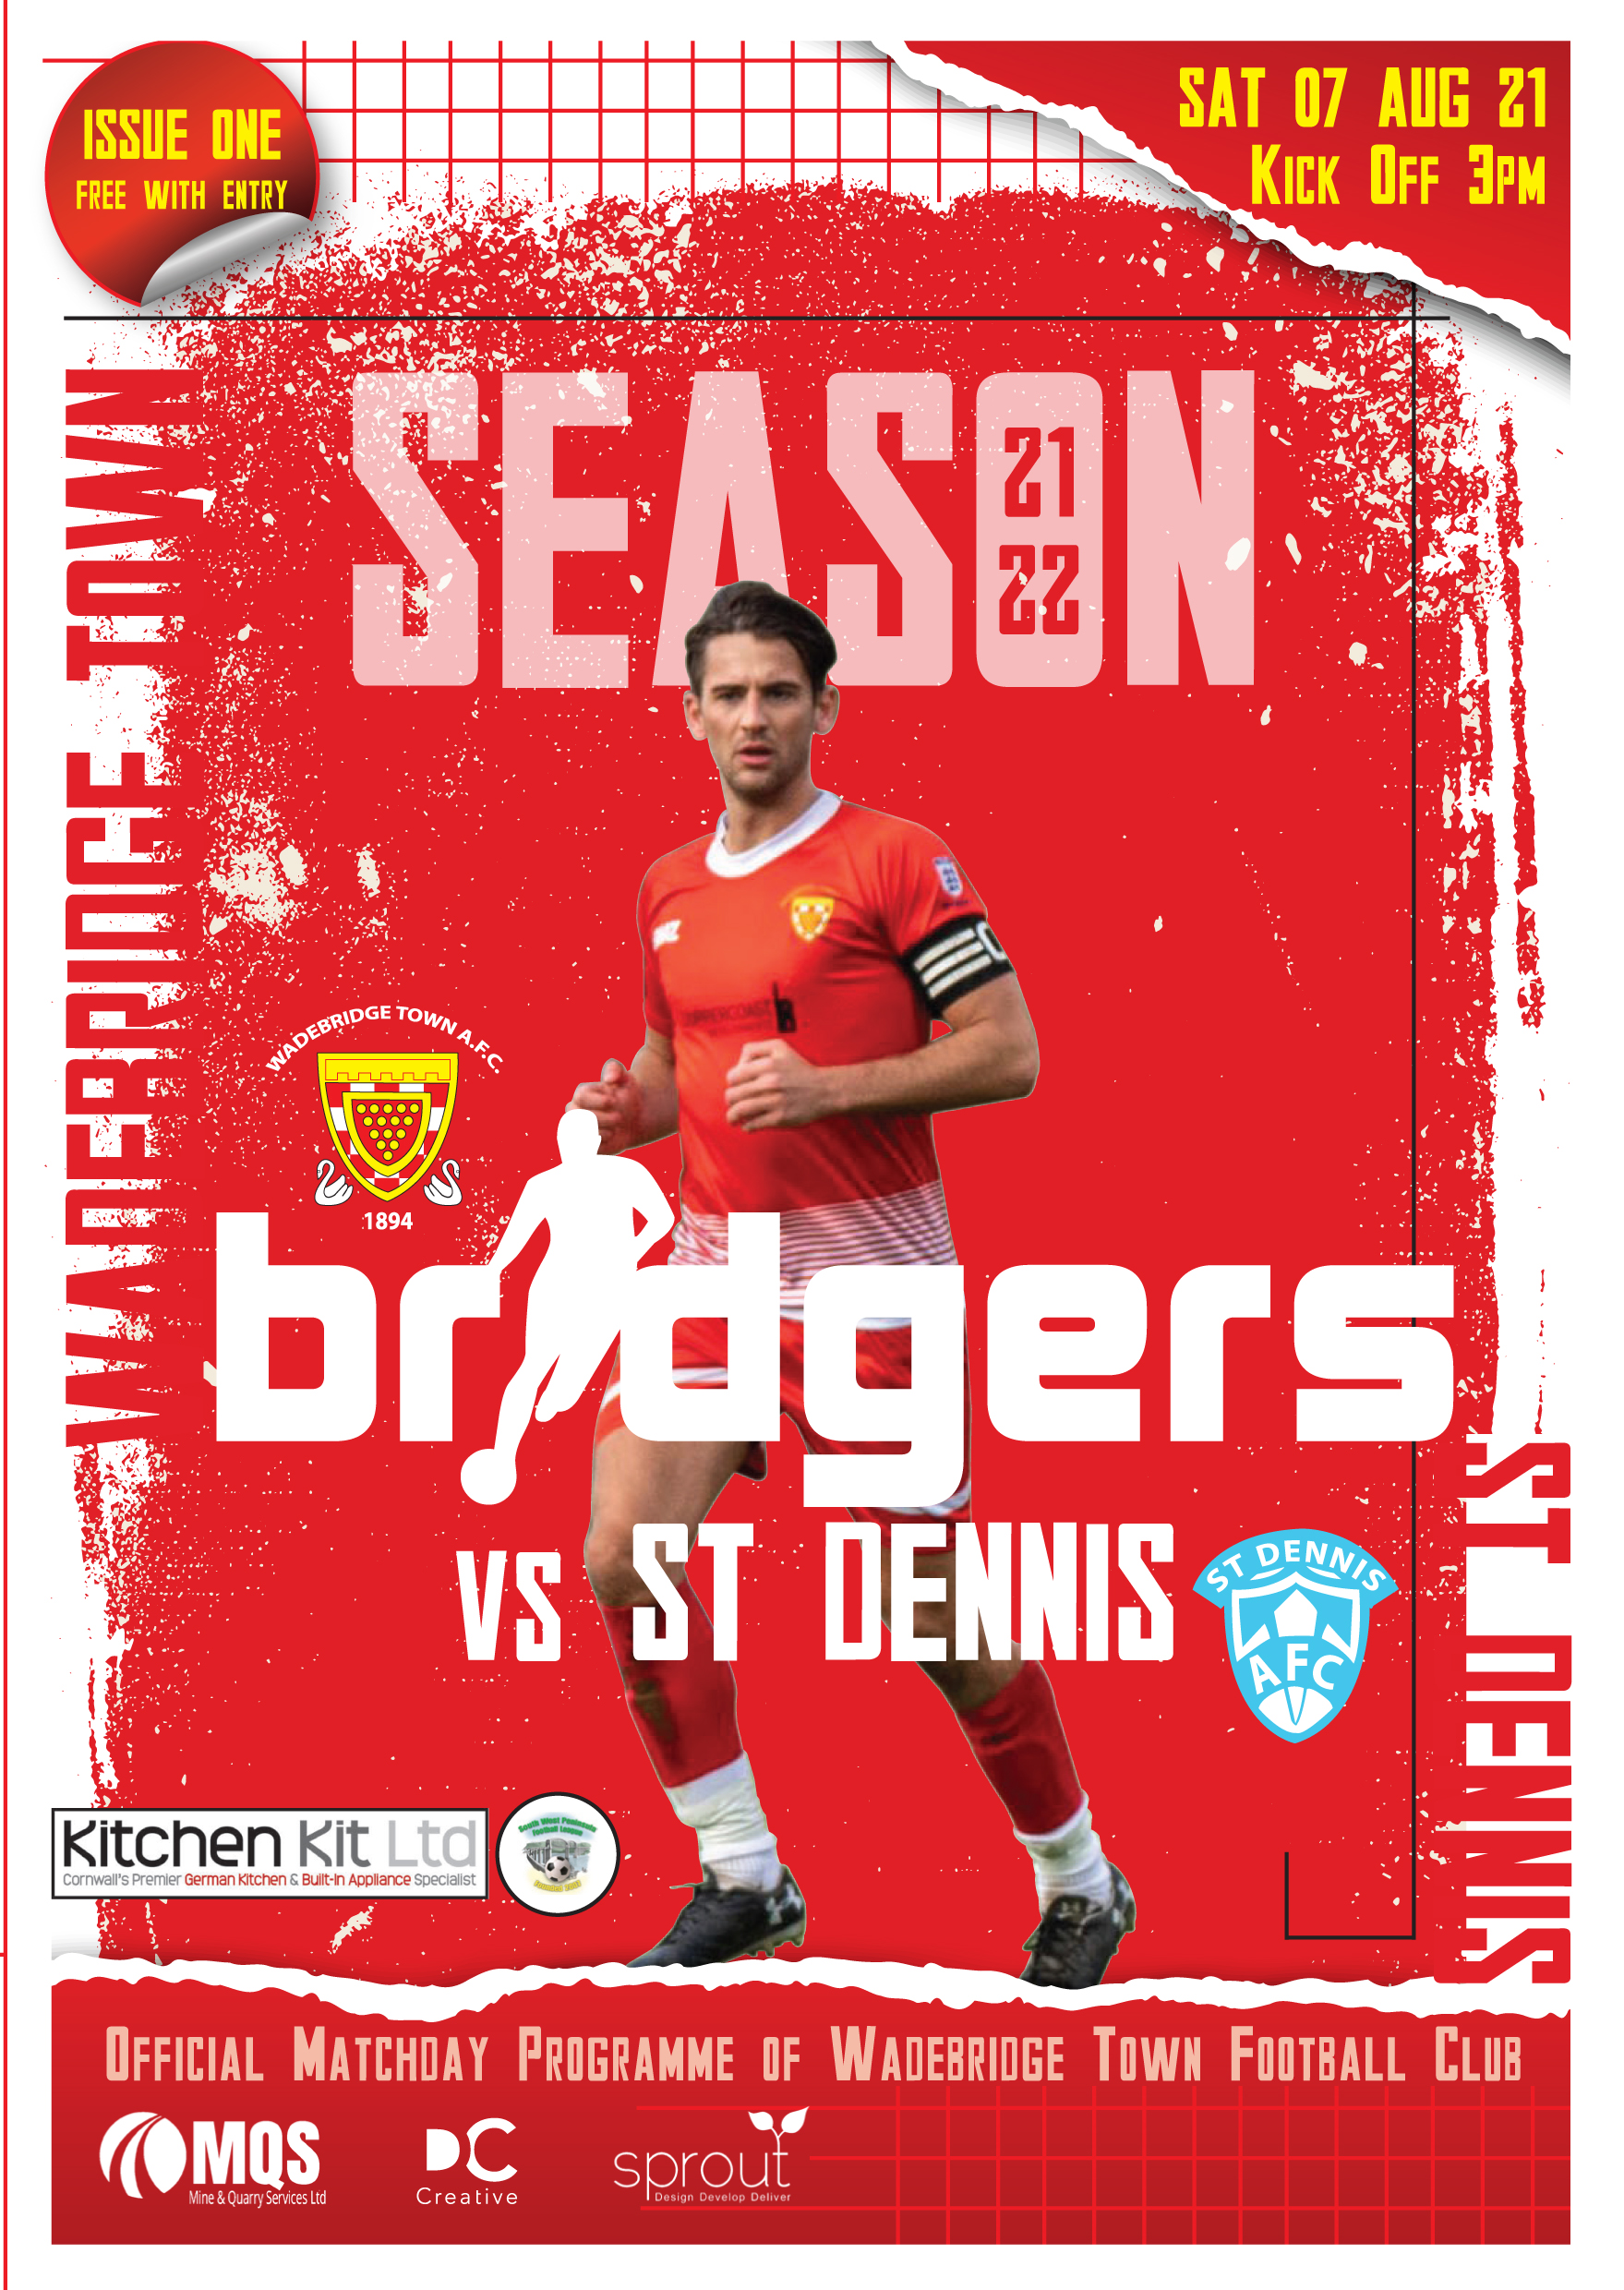 Matchday Programme - St Dennis Home 2021